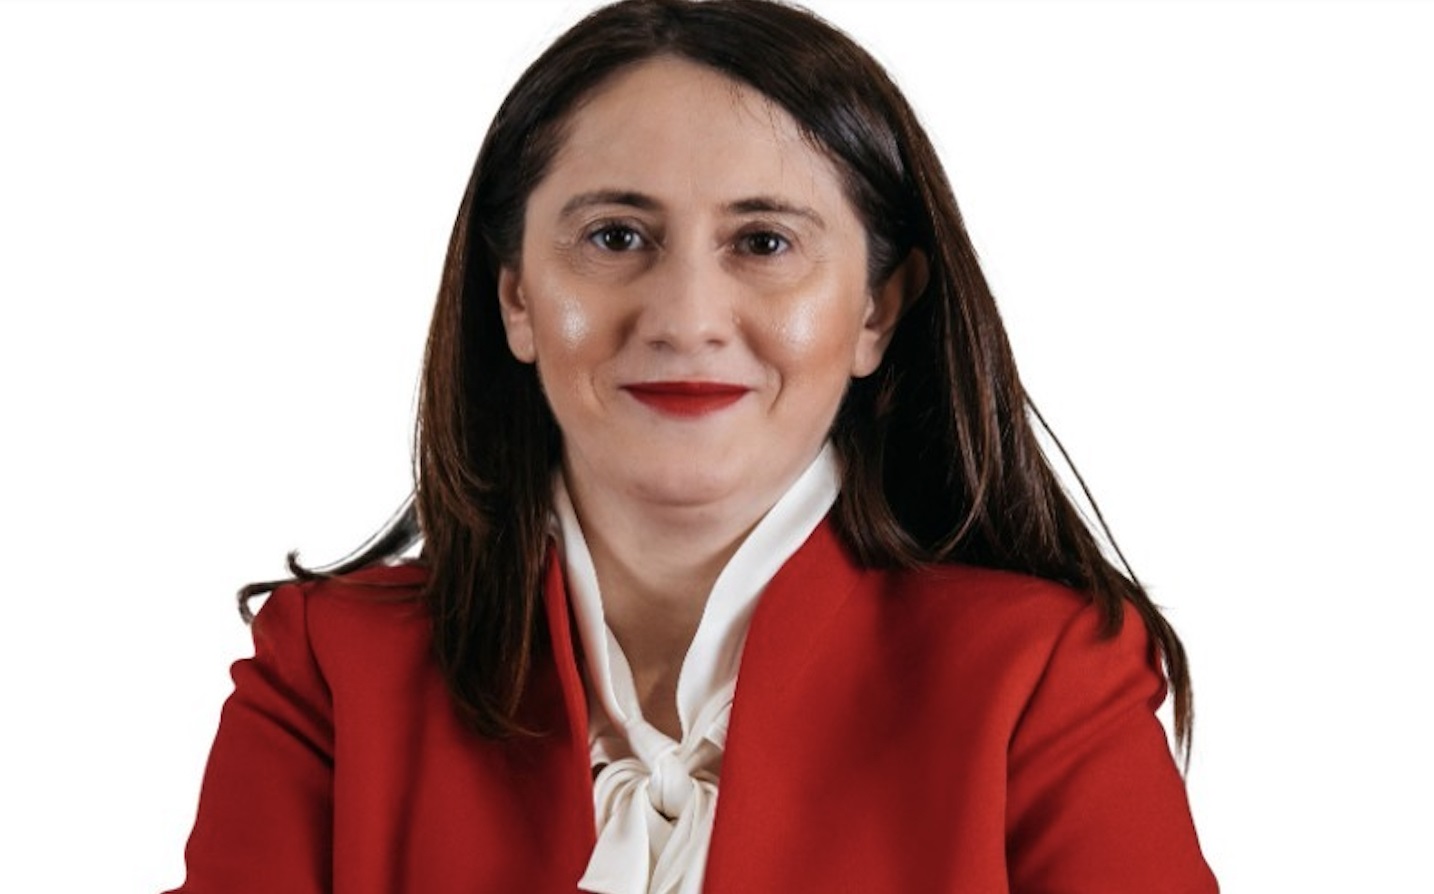 Nadia Oanea